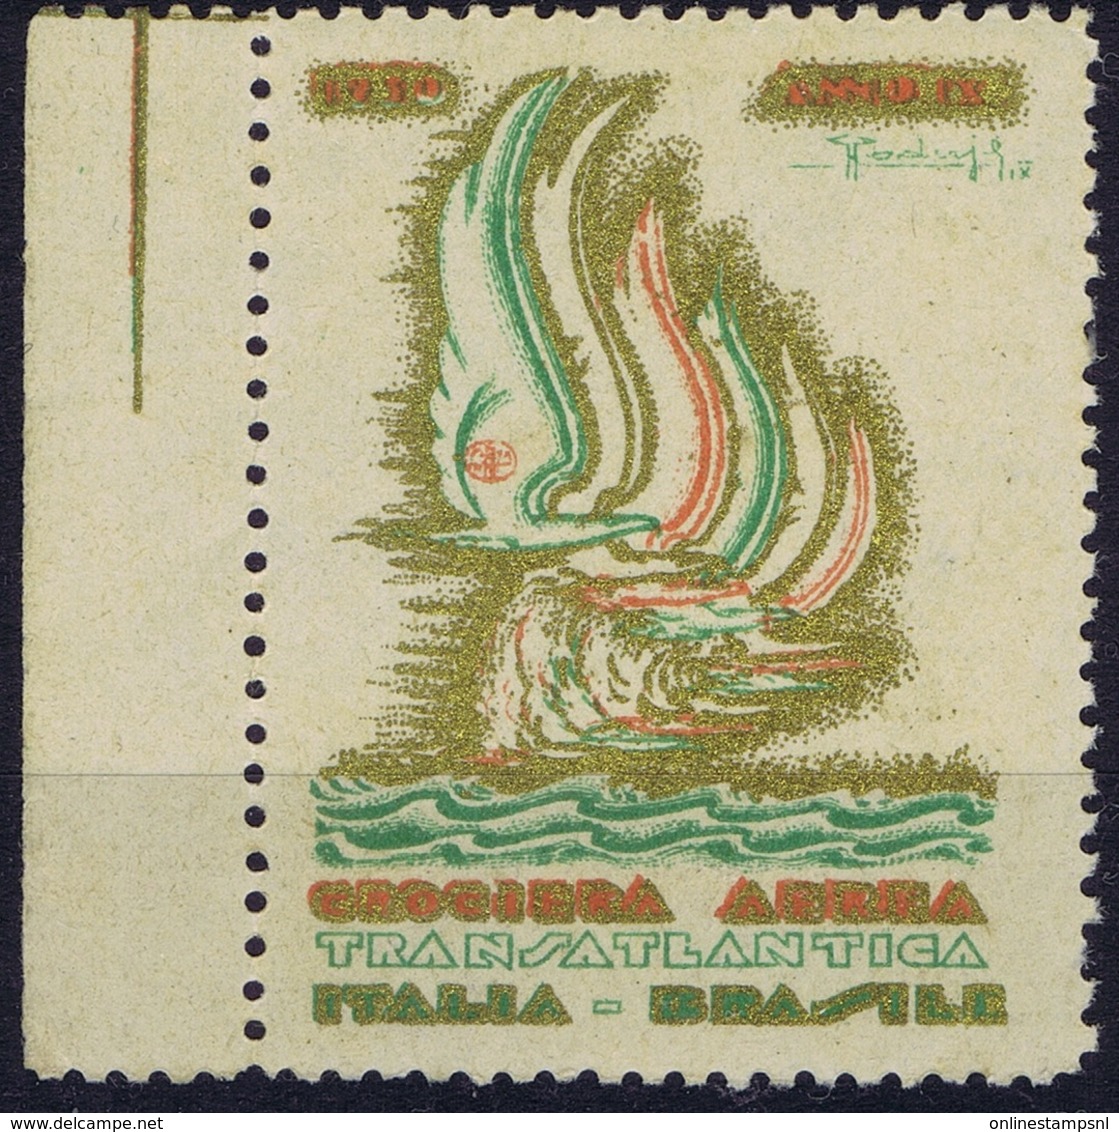 ITALY 1930 AVIAZIONE FASCISMO PROPAGANDA CEOCIERA AEREA TRANSATLANTIQUE ITALIA - BRASILE - Poste Aérienne